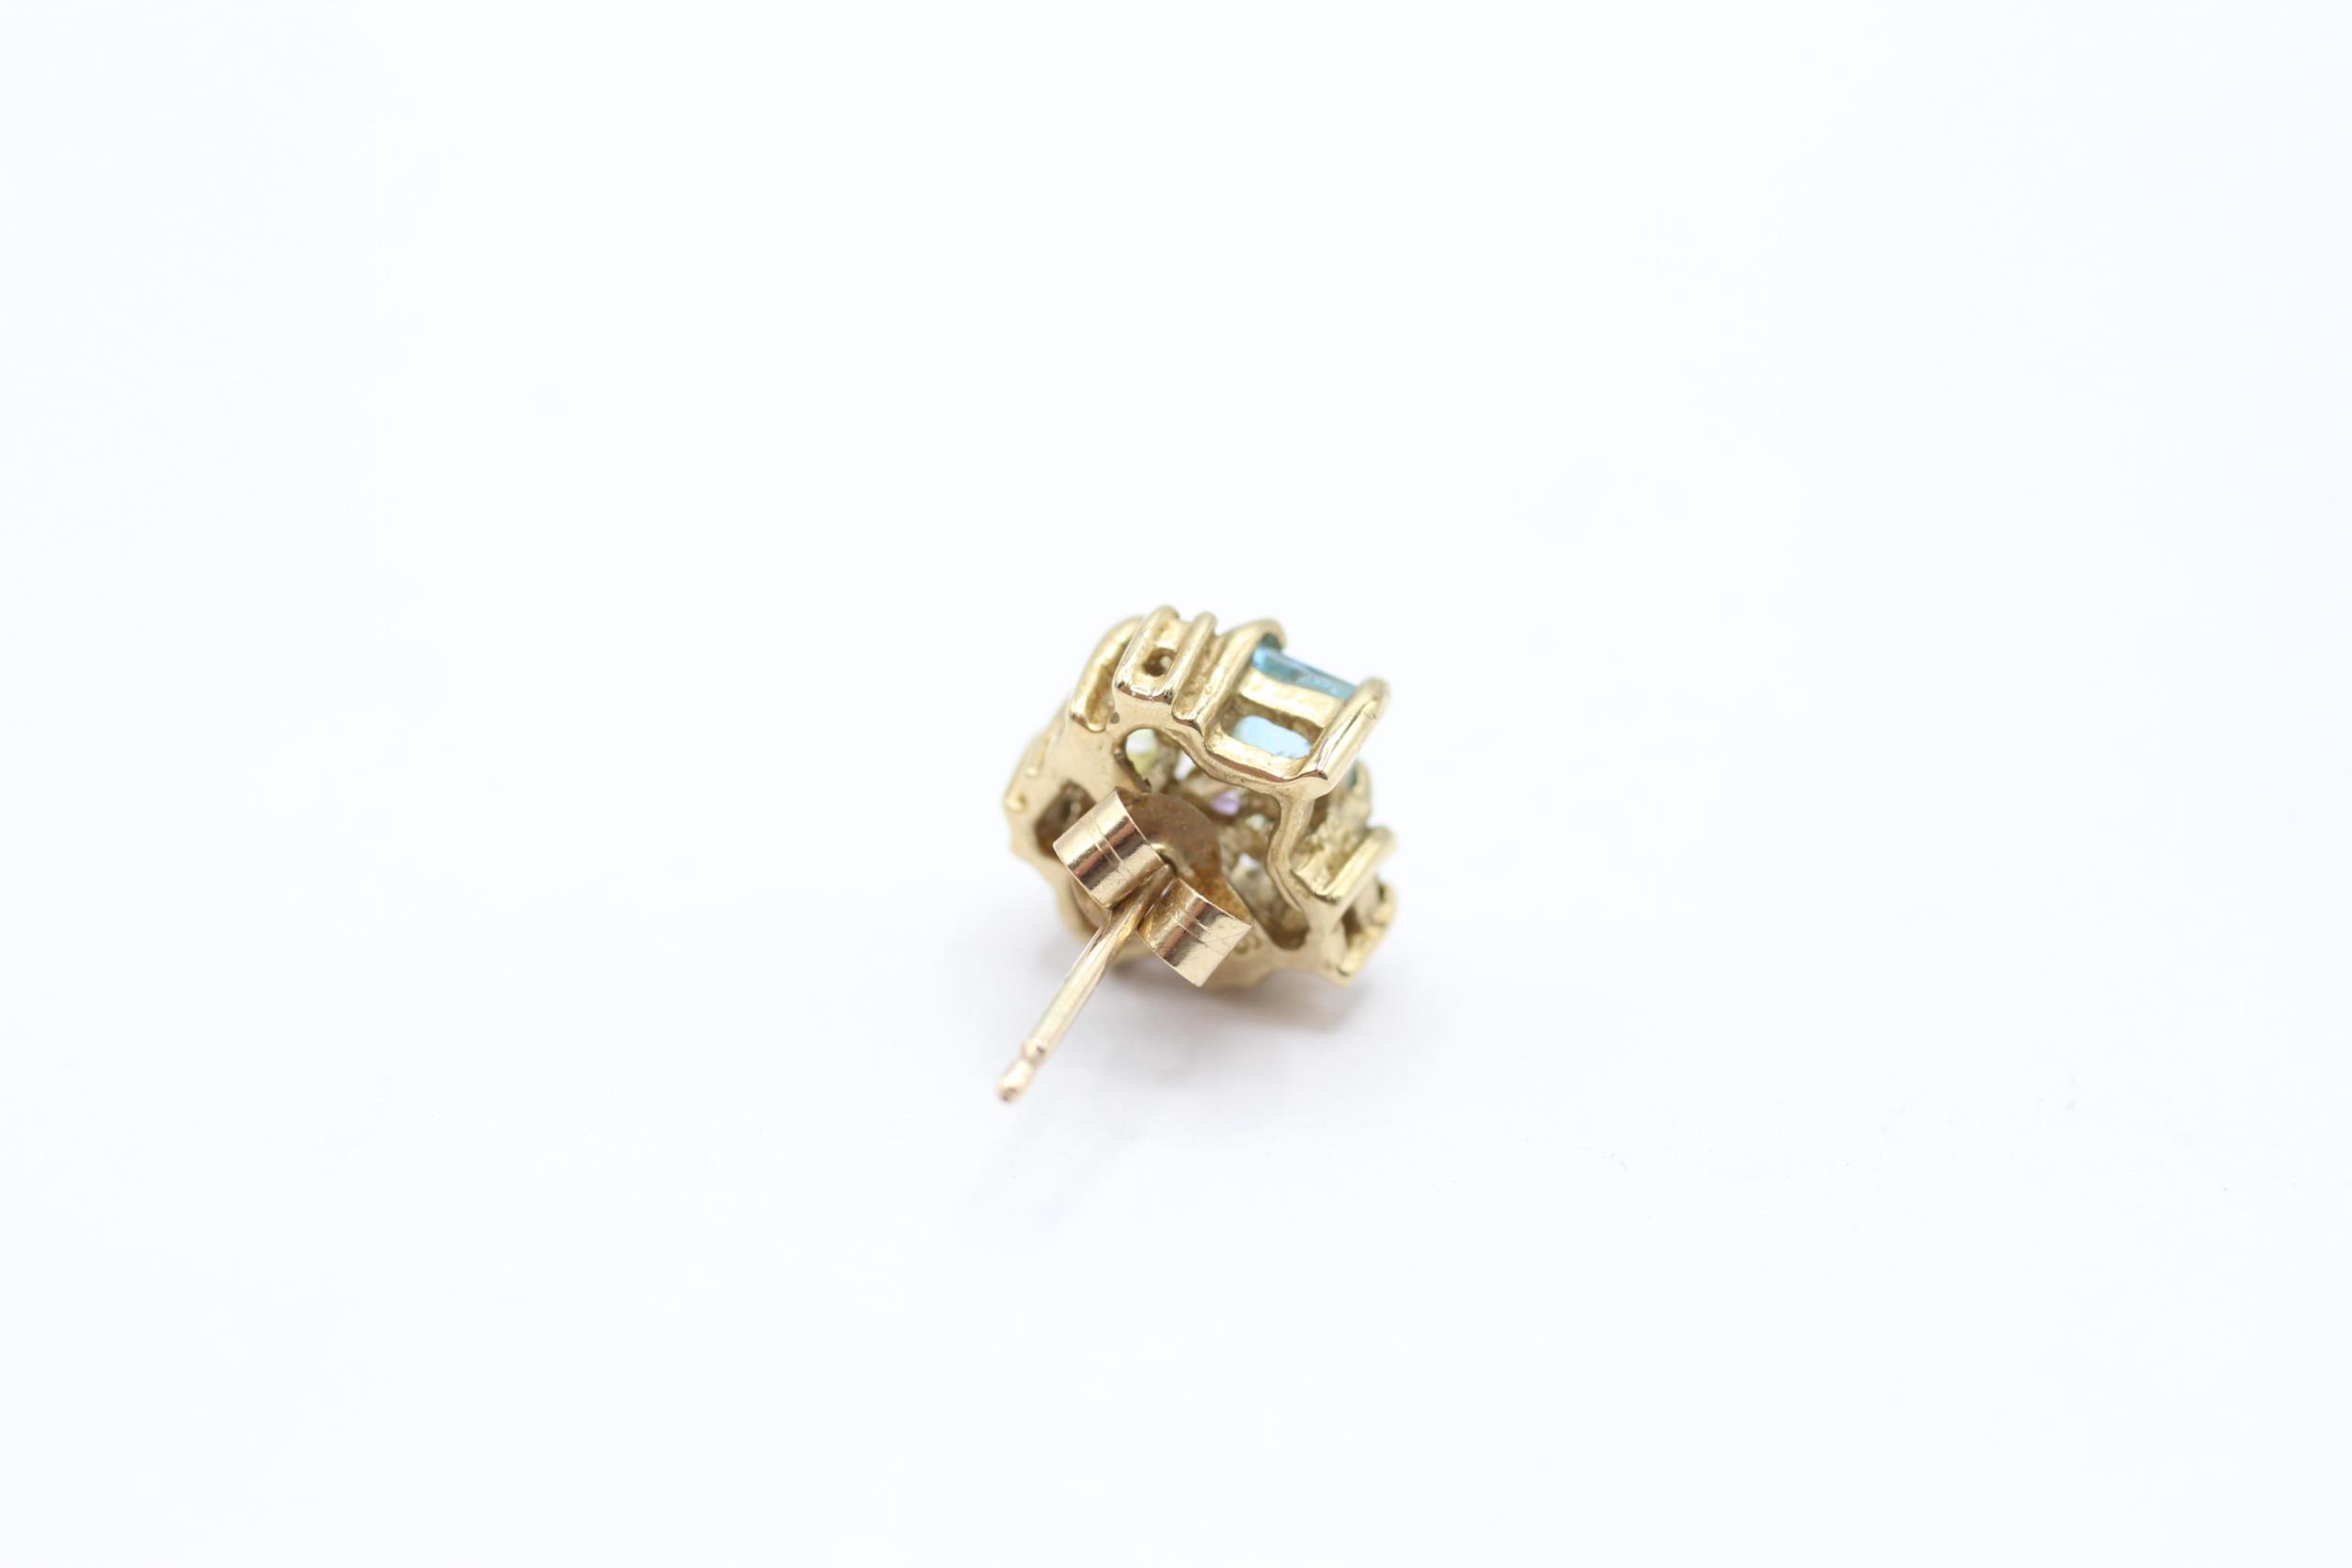 9ct gold multi gemstone cluster stud earrings, gemstones including: amethyst, topaz, citrine, - Image 4 of 4